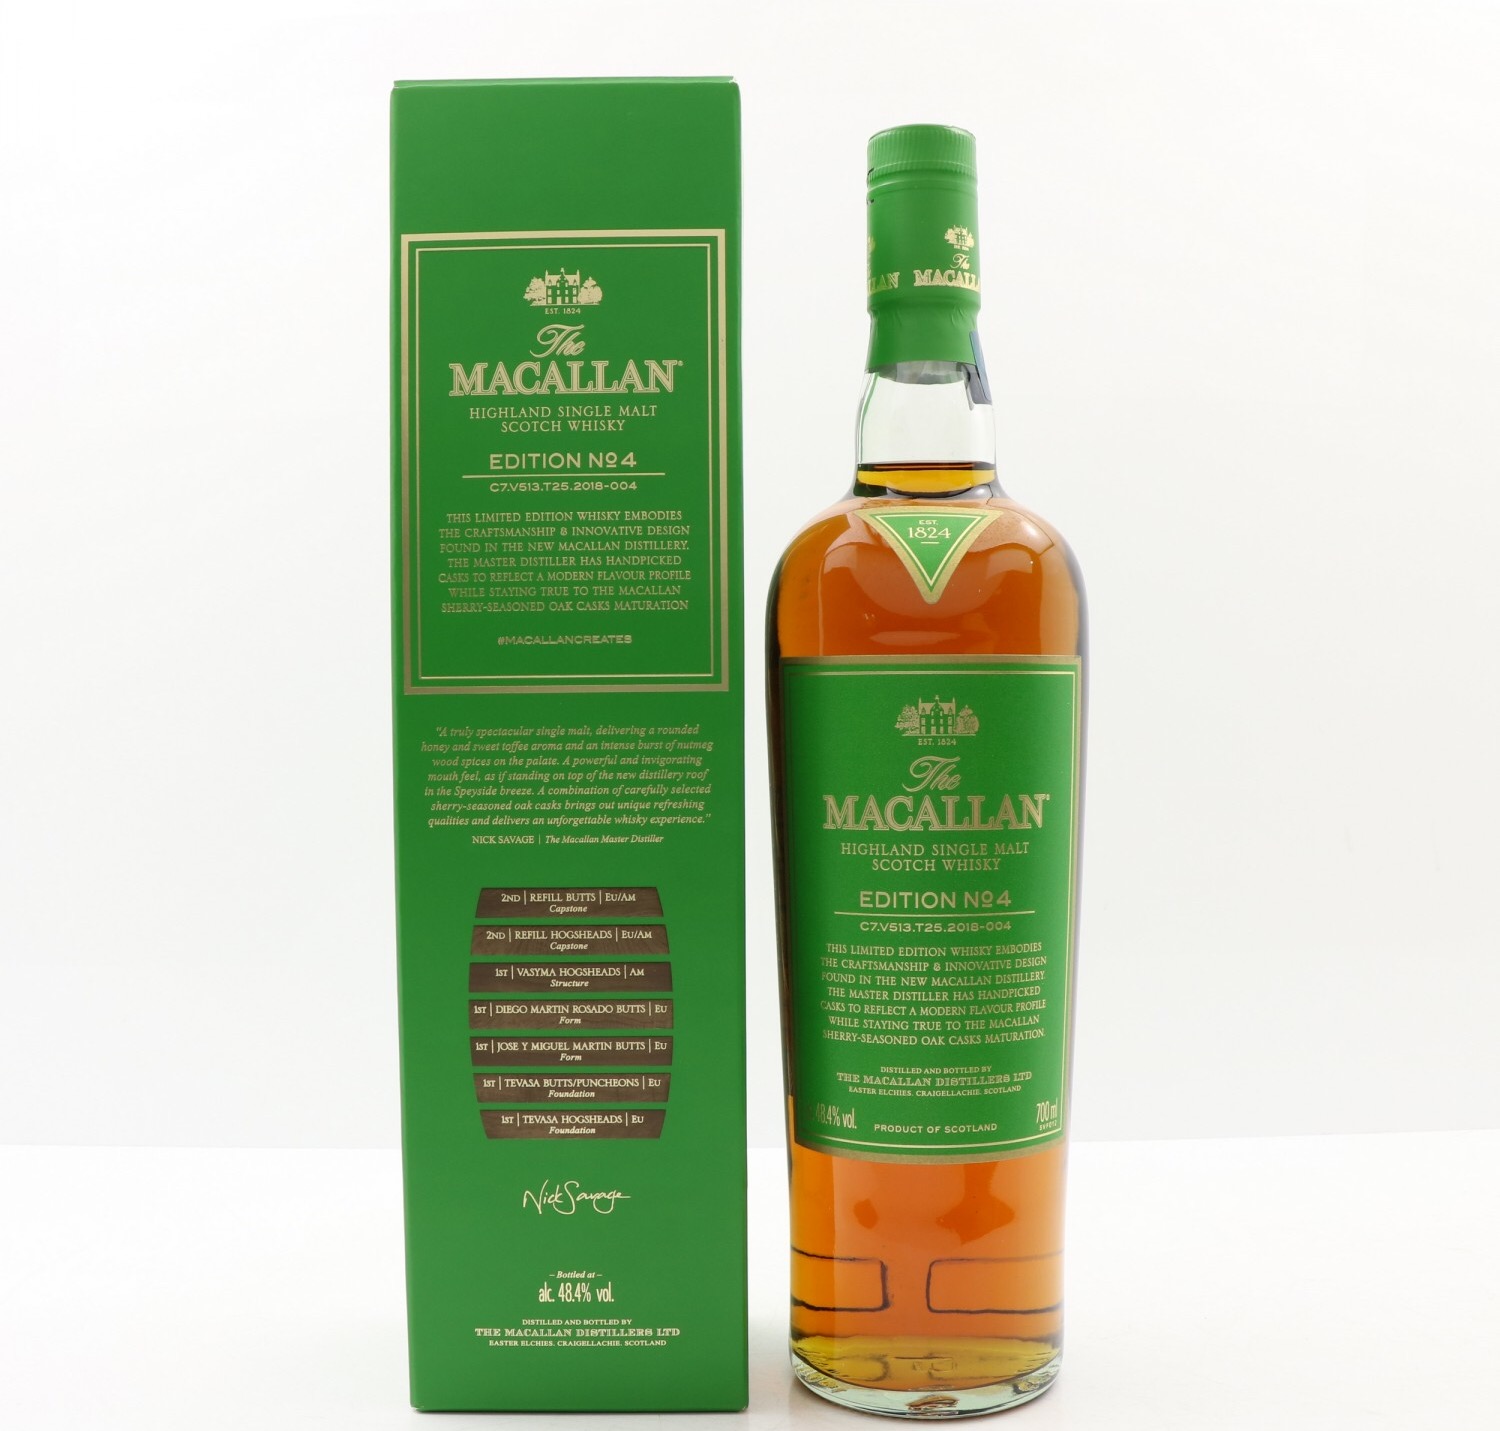 The Macallan Edition 4 Rare Malt Whisky Company